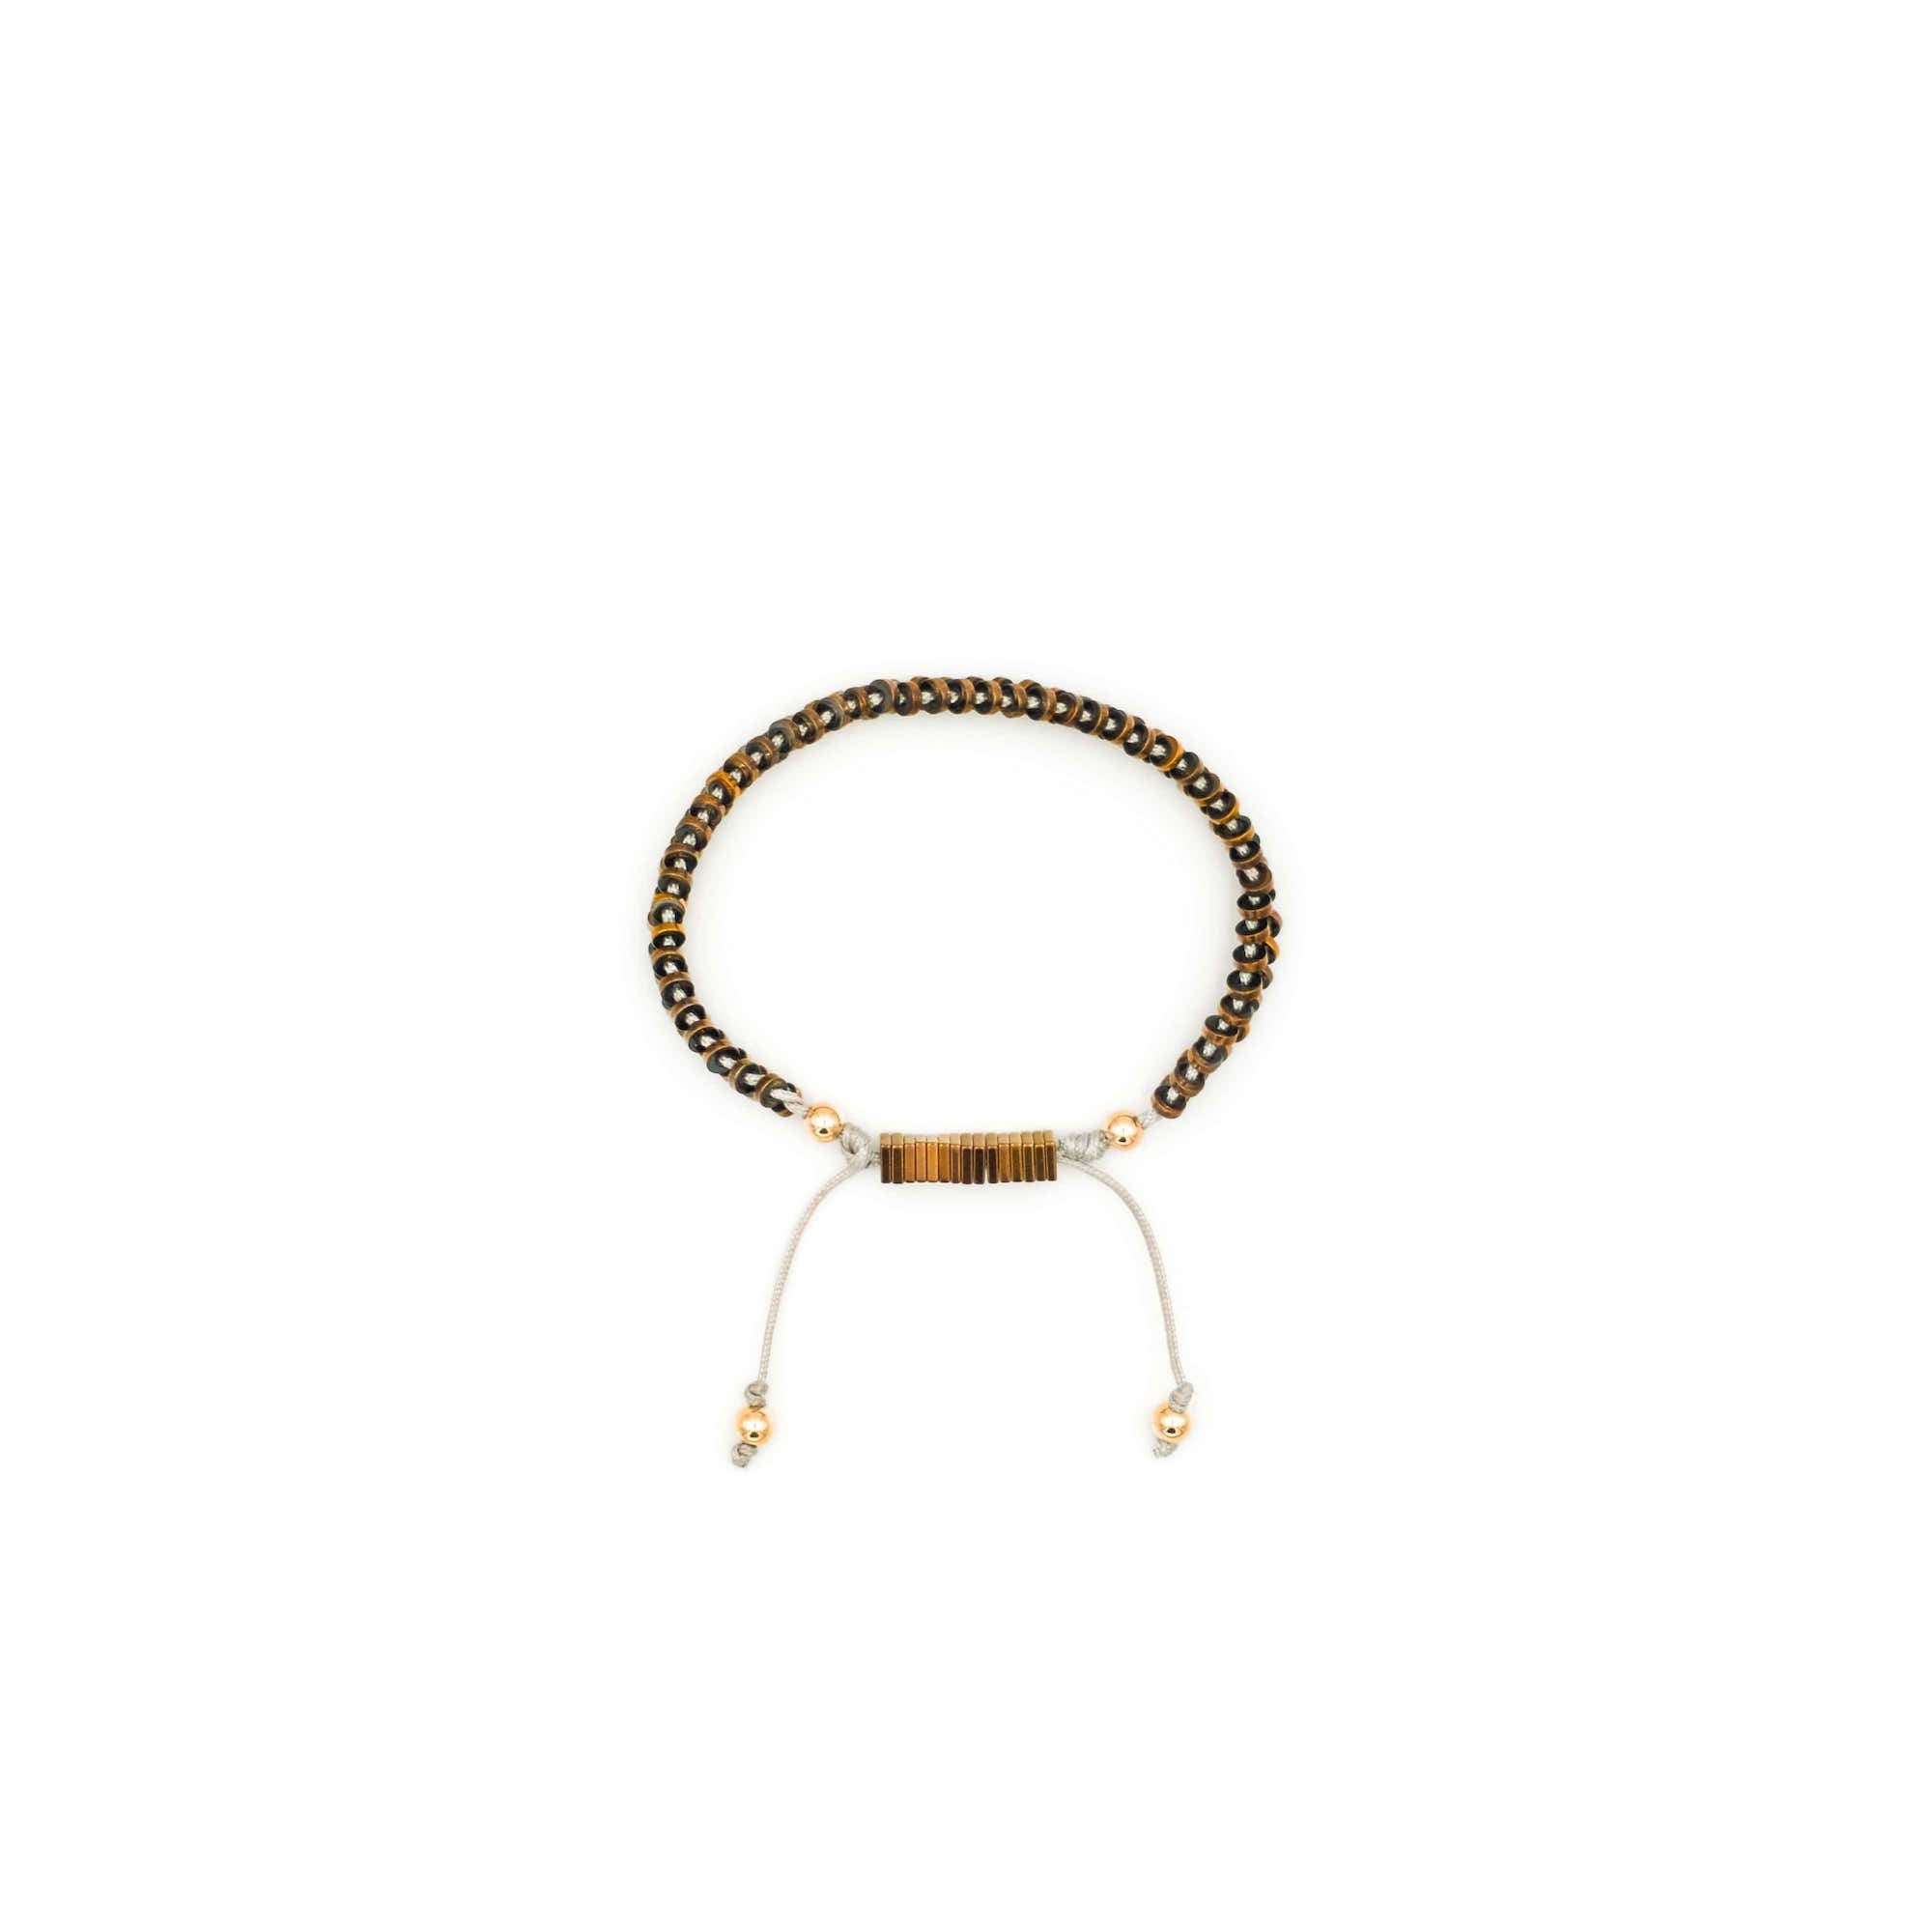 Handcrafted designer stone jewelry bracelet rose gold hematite - Popvibe